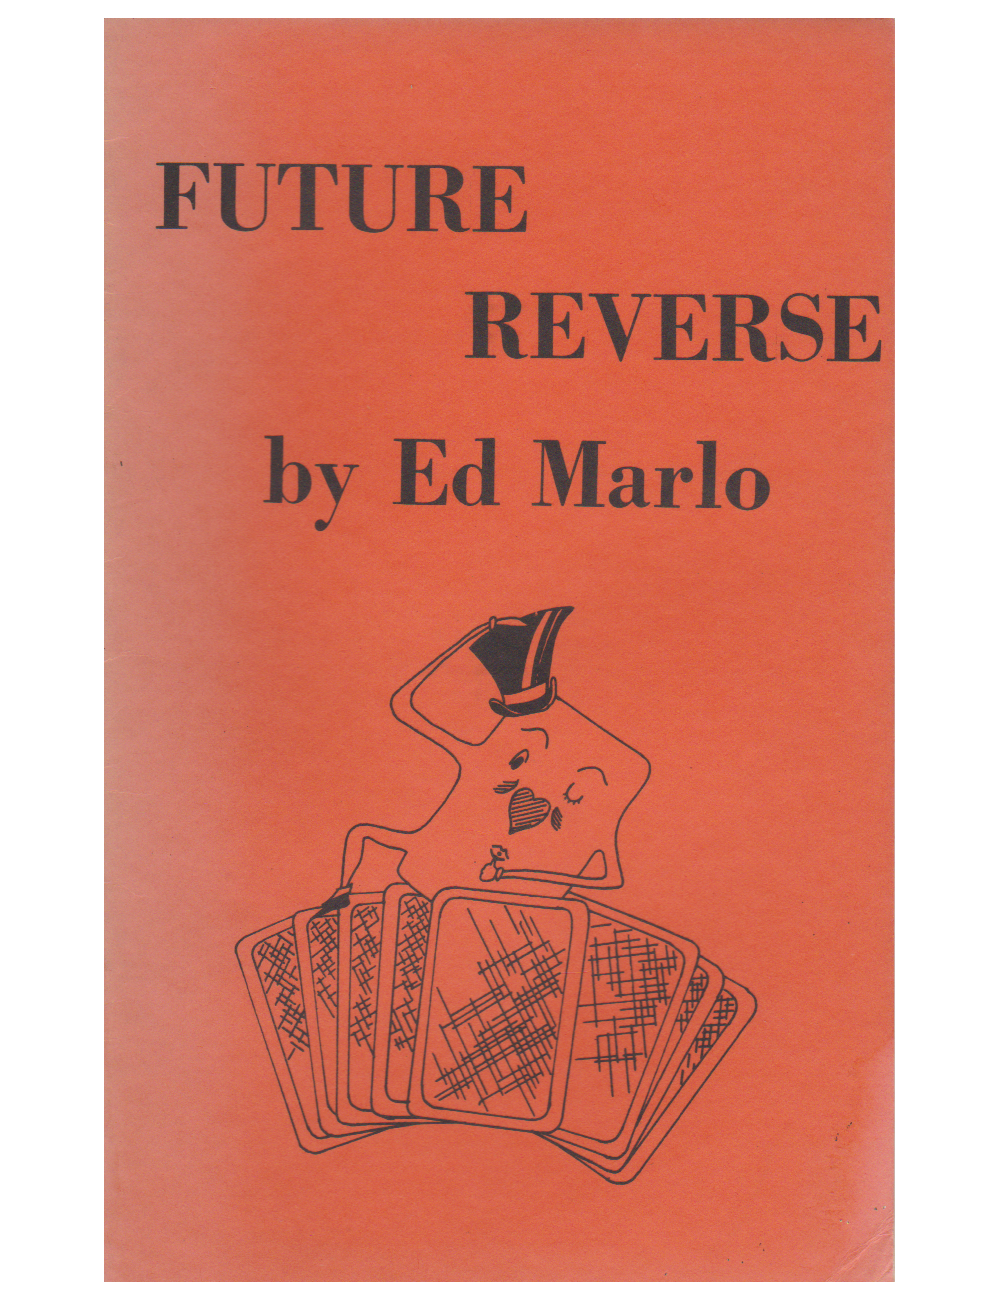 FUTURE REVERSE BY ED MARLO